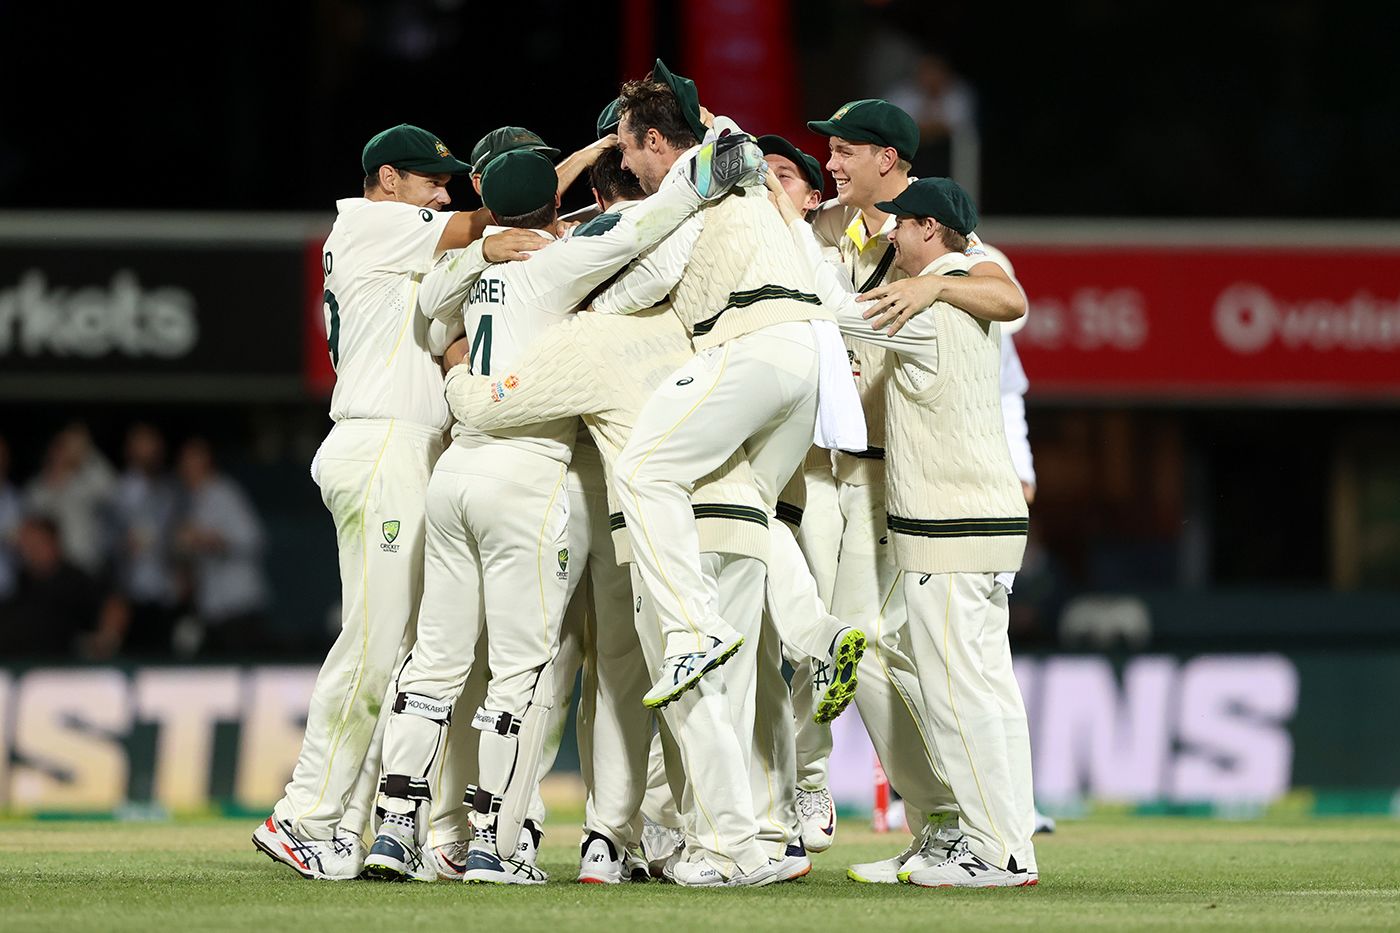 Live match blog - Australia vs England 5th Test 2021/22